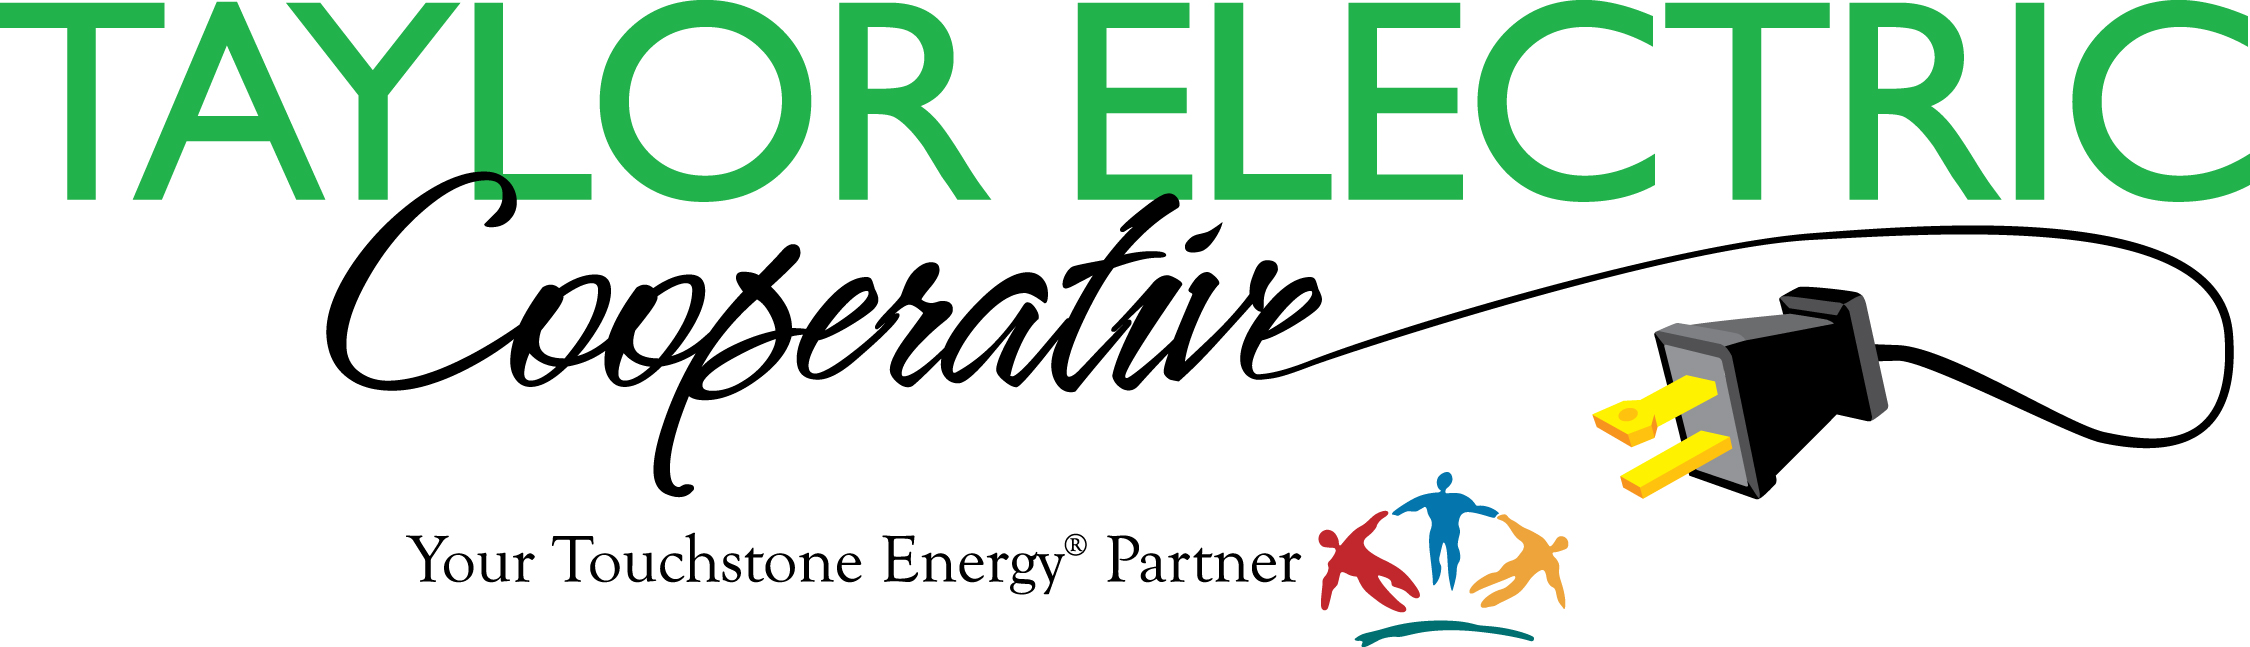 taylor electric logo